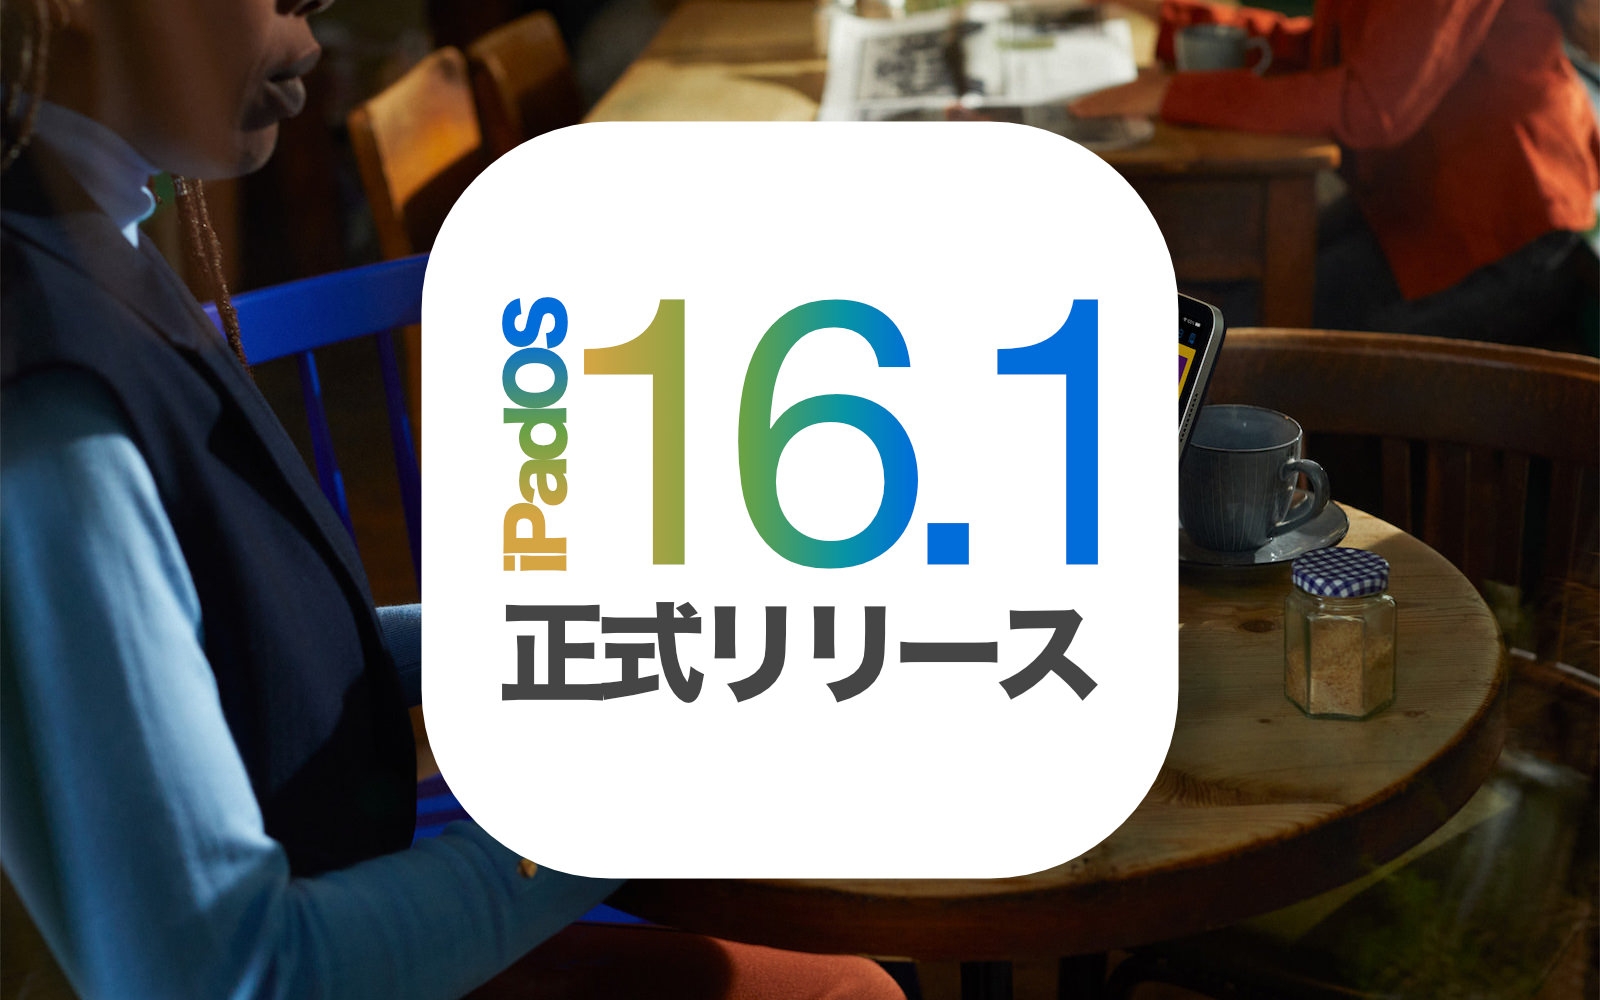 IpadOS16 1 official release